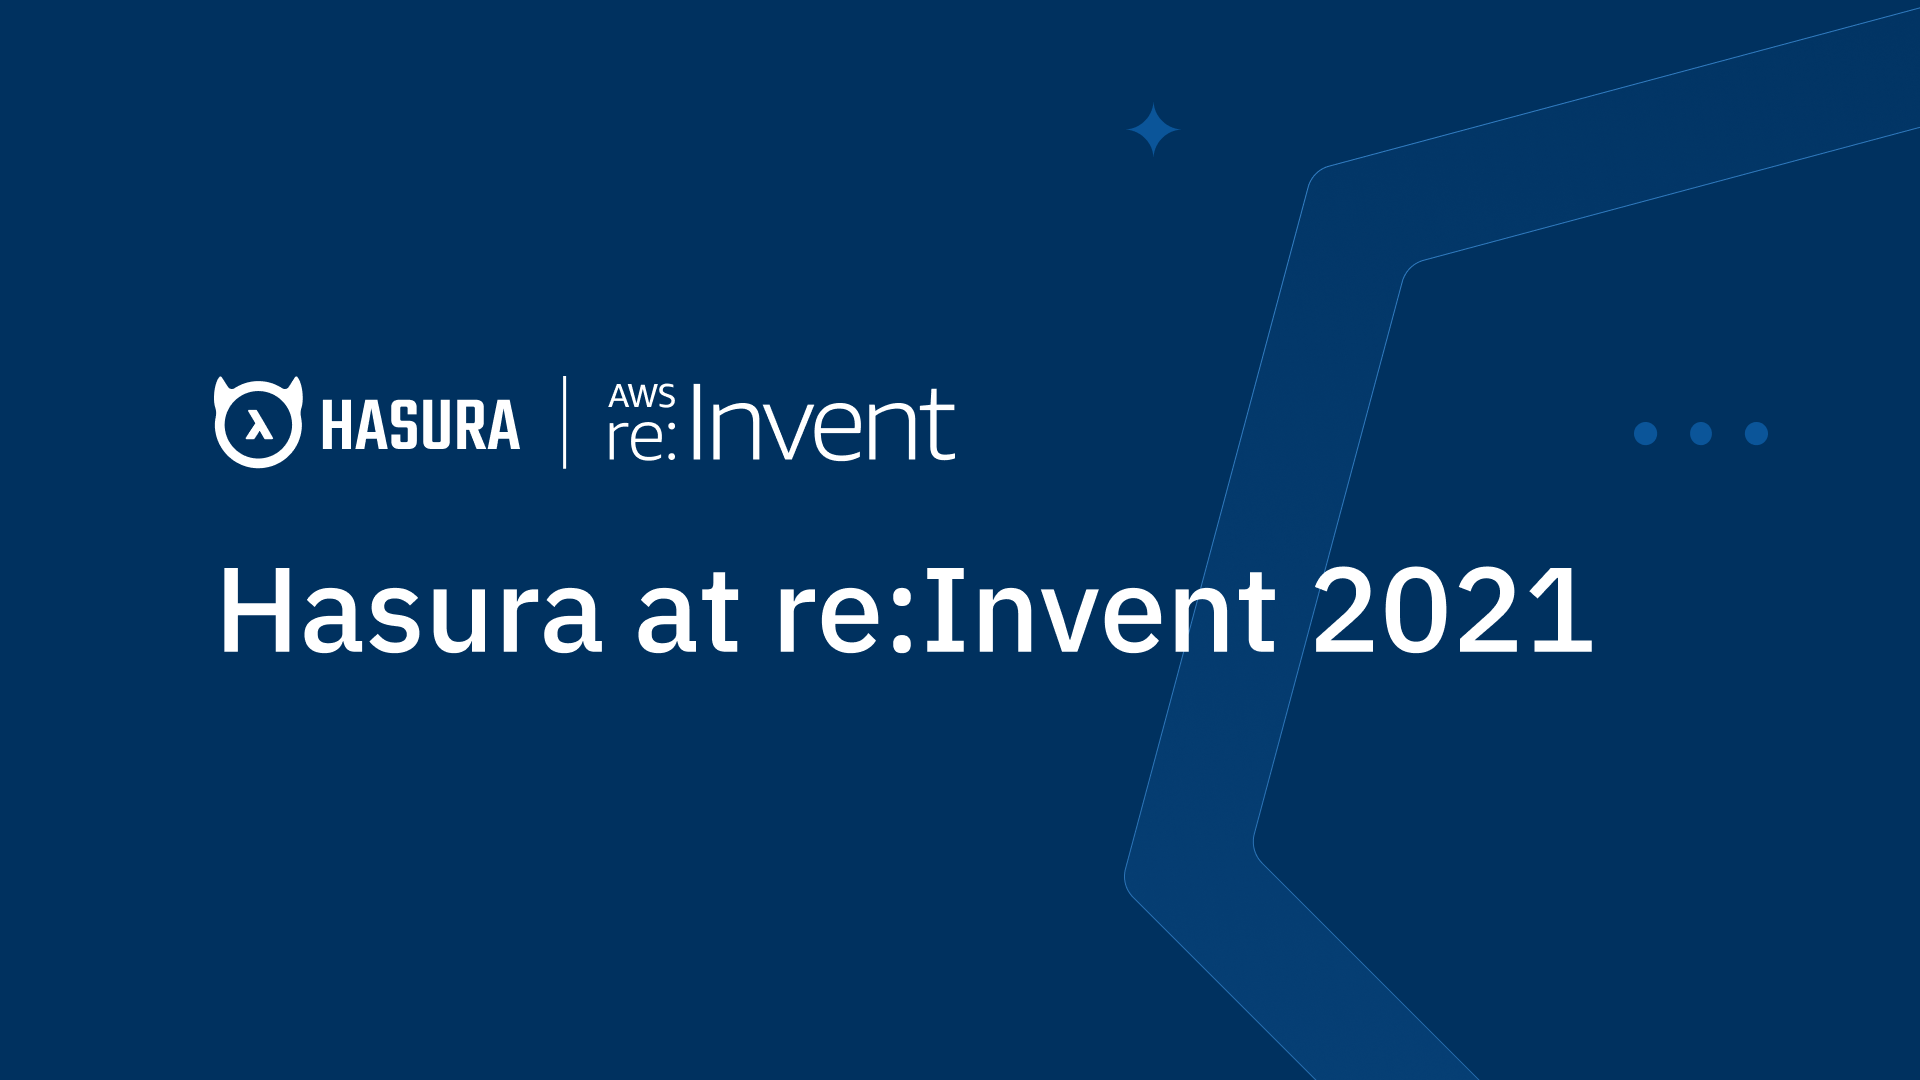 Meet Hasura at AWS re:Invent